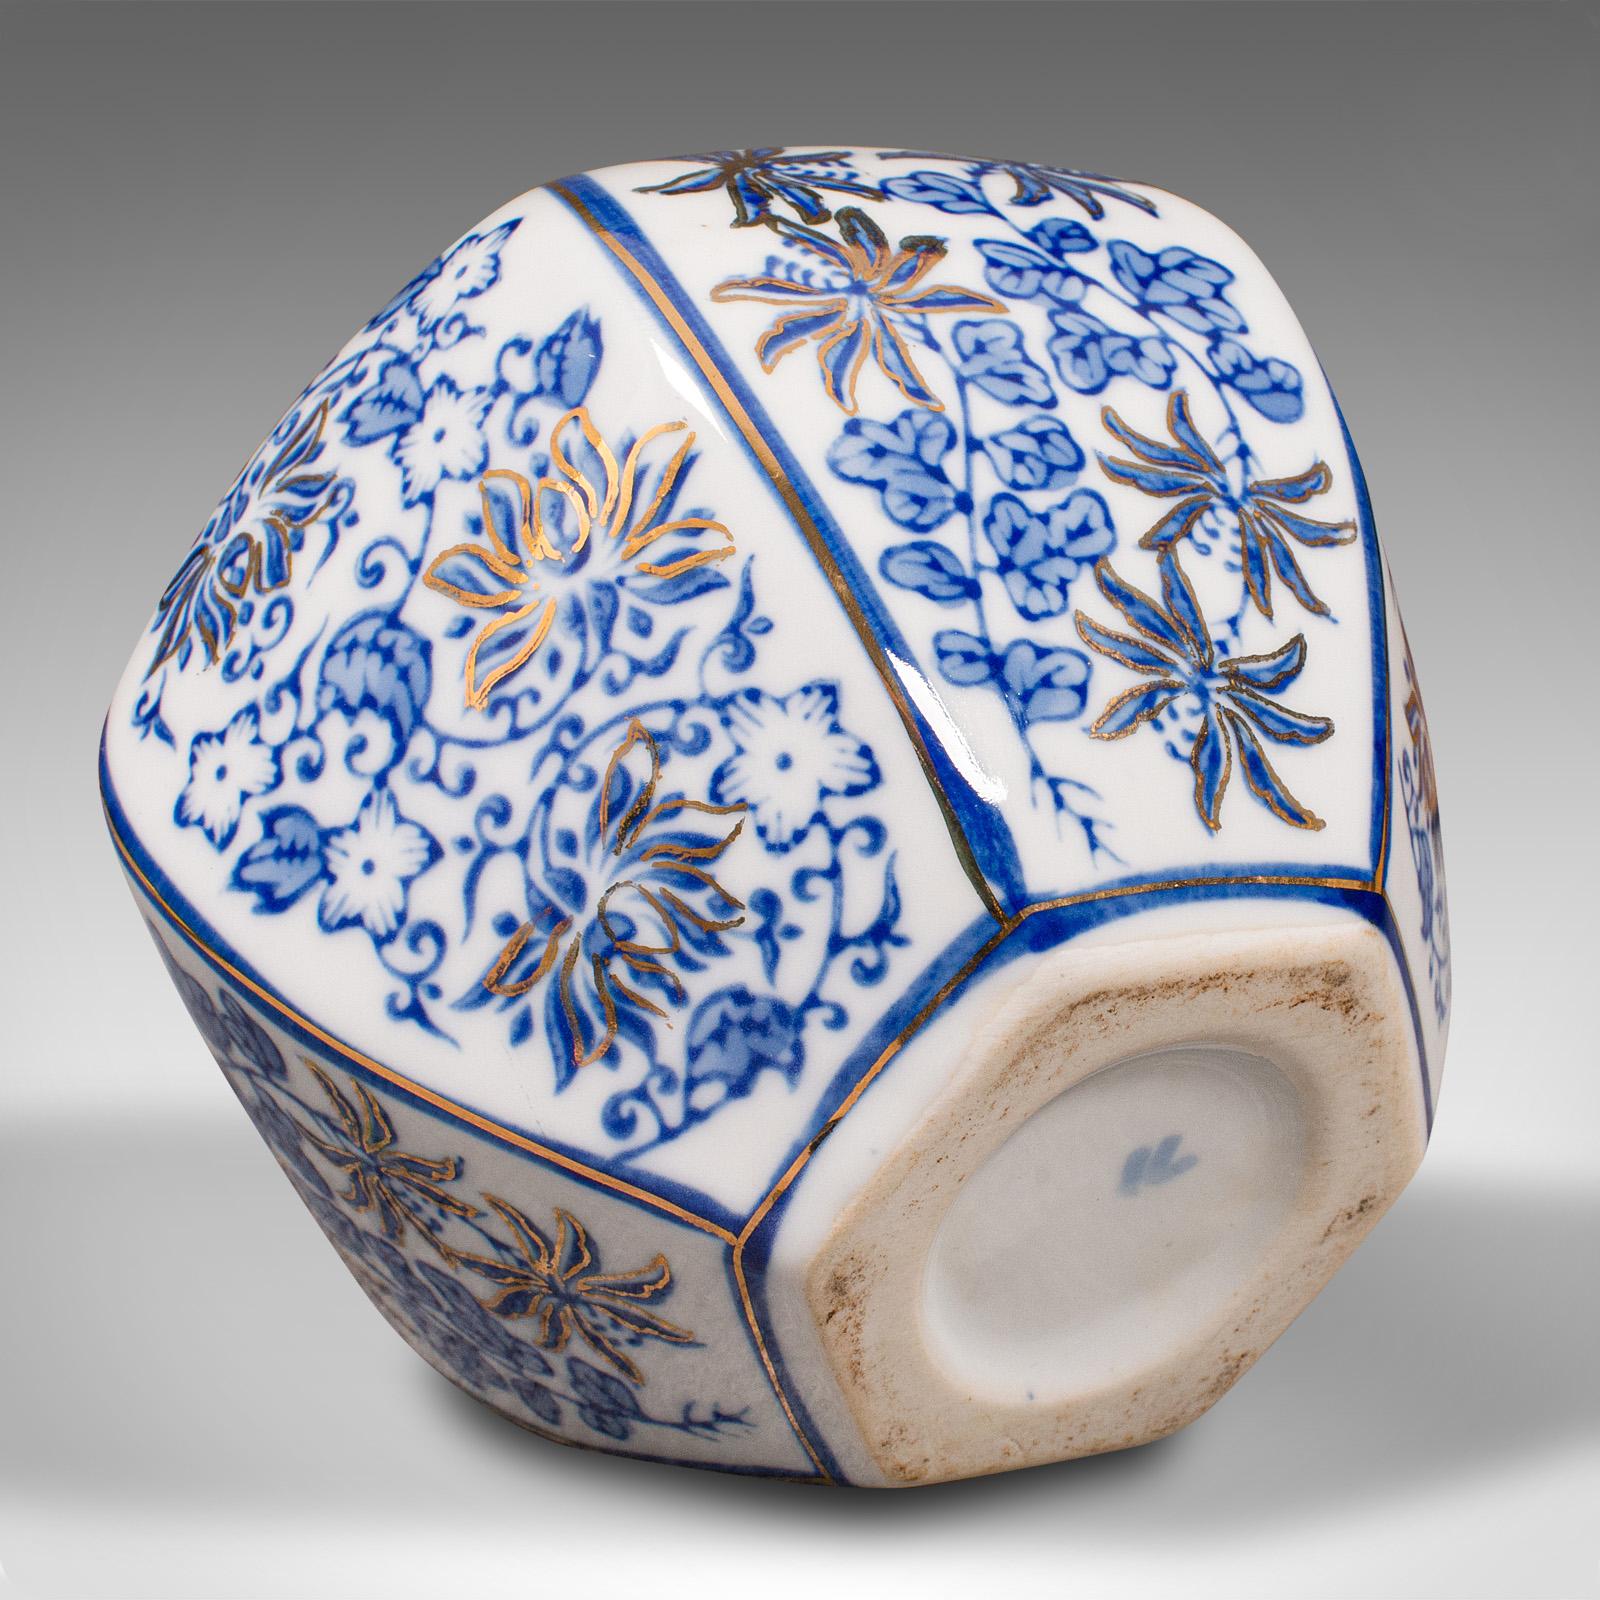 Vintage Blue and White Spice Jar, Chinese, Ceramic, Decorative Pot, Art Deco For Sale 6